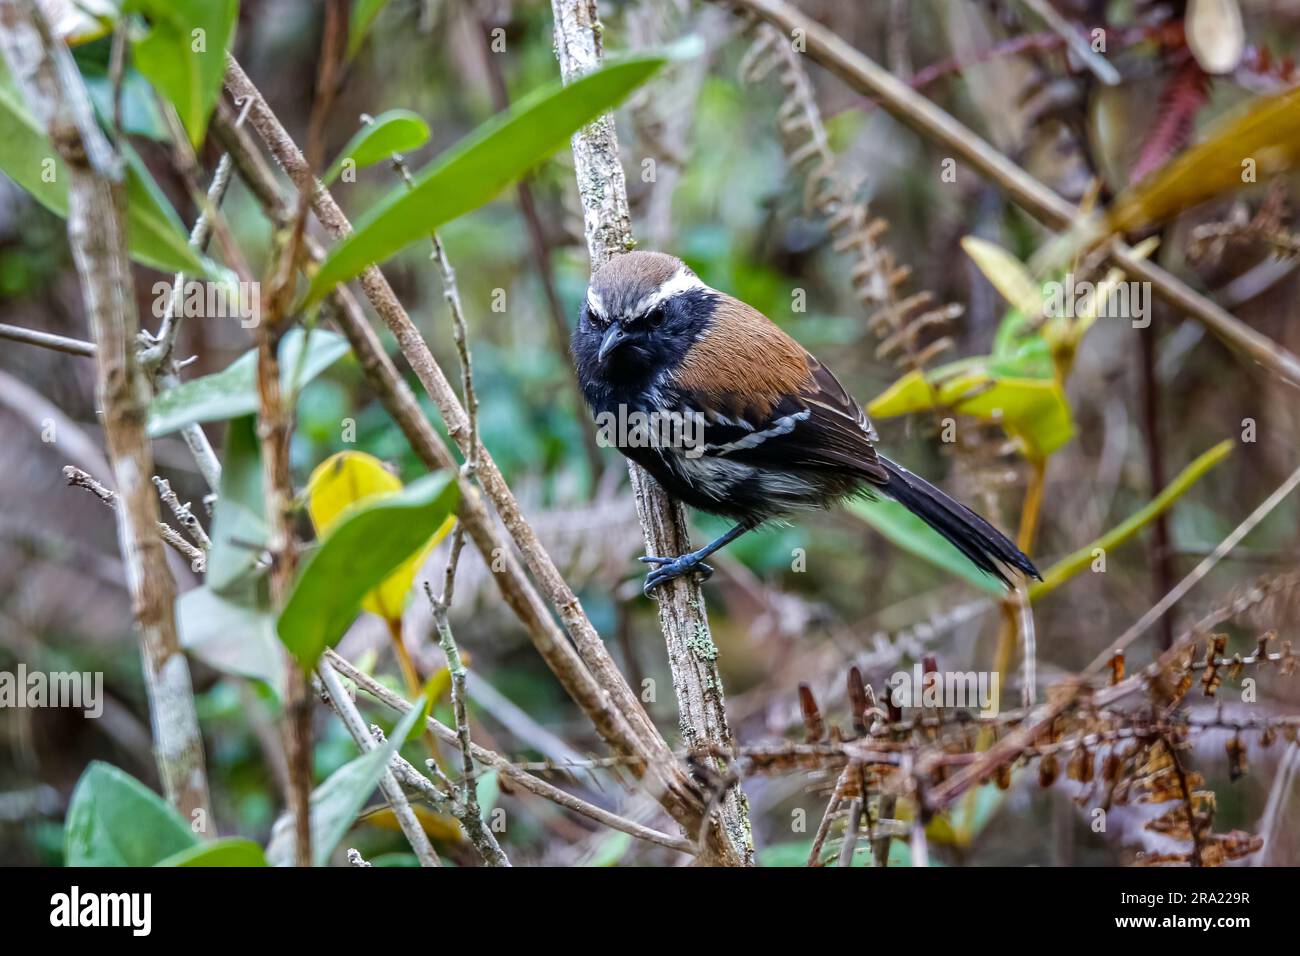 Close-up of a Serra antwren facing camera and perched on a tiny branch, Caraca Natural Park, Minas Gerais, Brazil Stock Photo